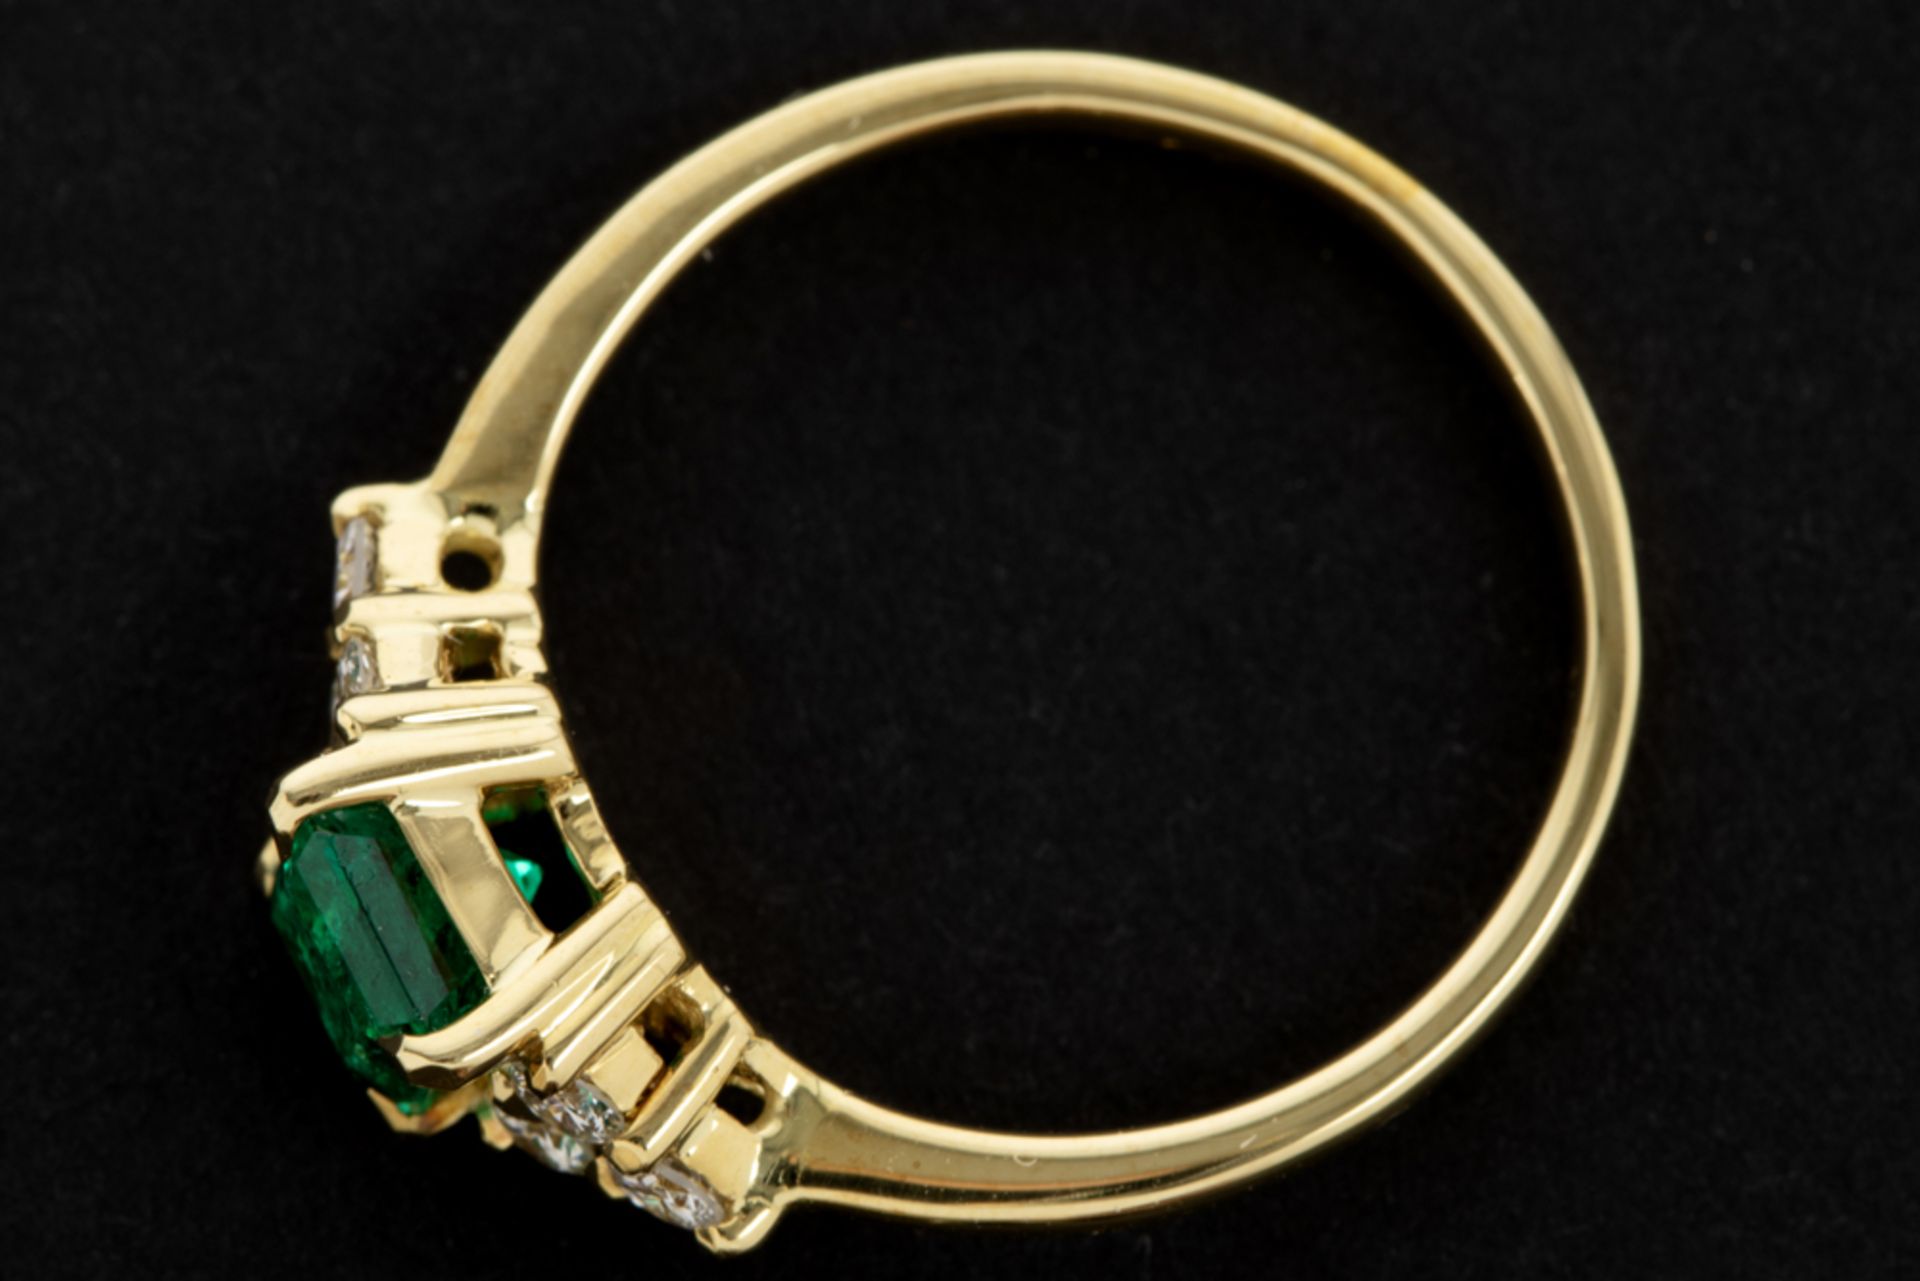 ring in yellow gold (18 carat) with a 0,80 carat "transparent vivid green" emerald and 0,22 carat of - Bild 2 aus 3